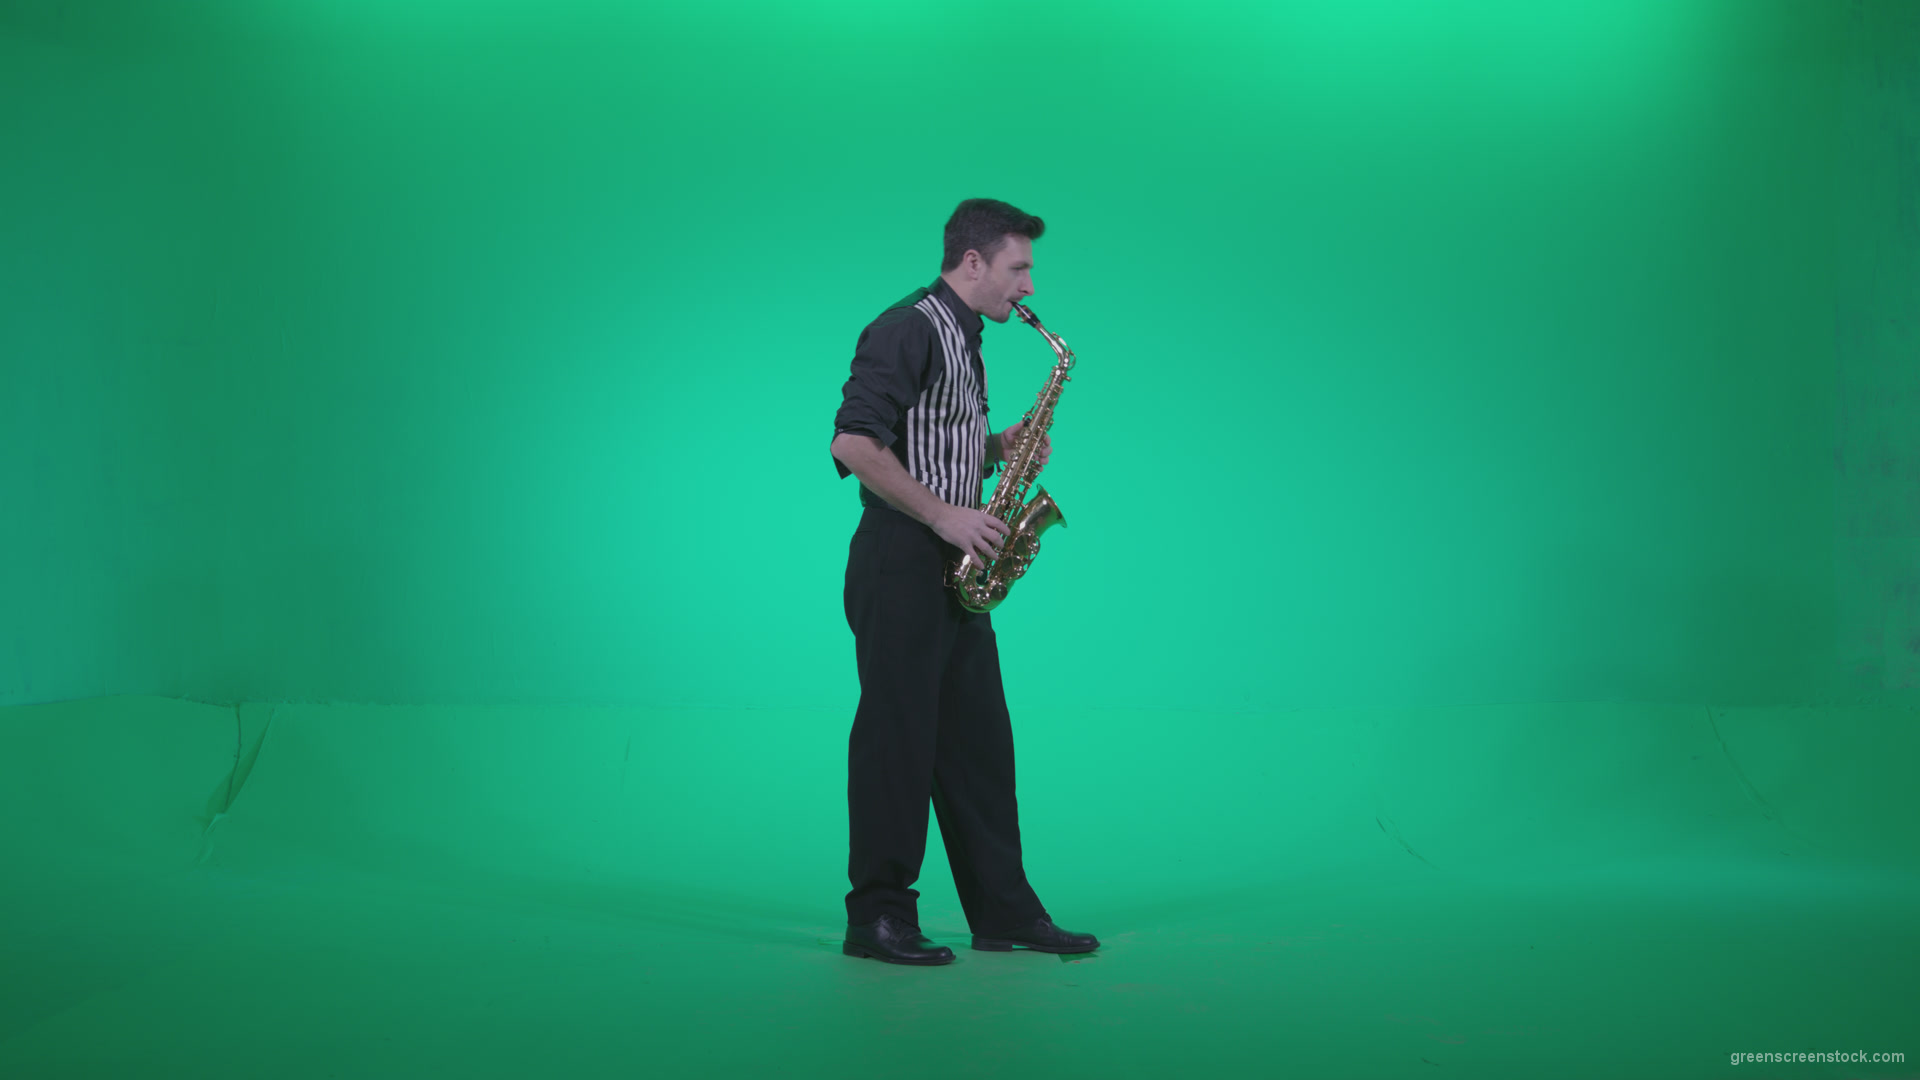 Saxophone-Virtuoso-Performer-s3_001 Green Screen Stock